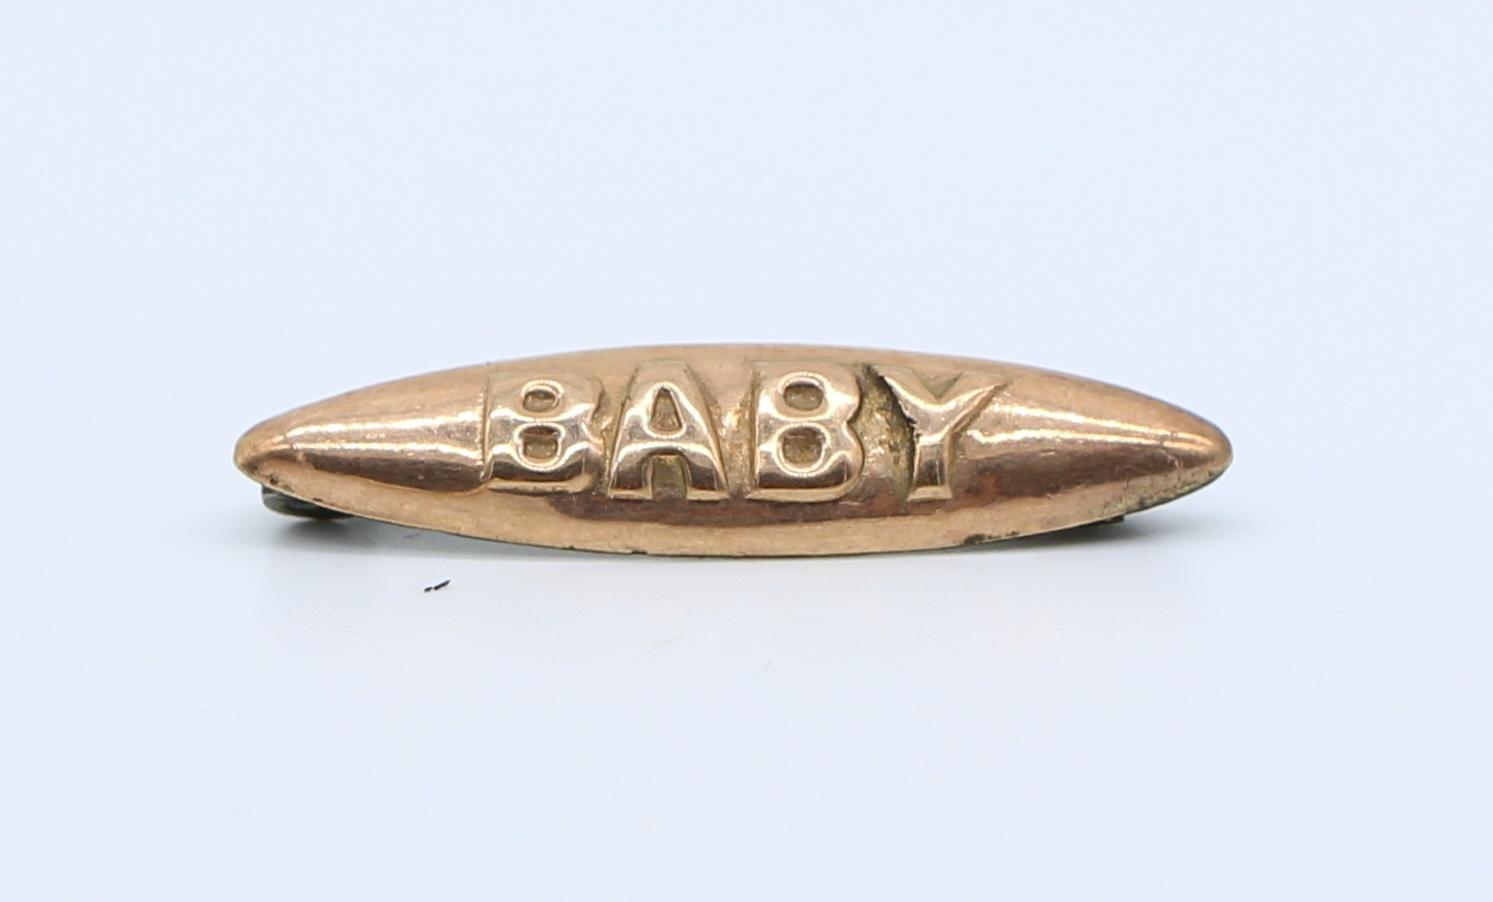 Baby's brooch